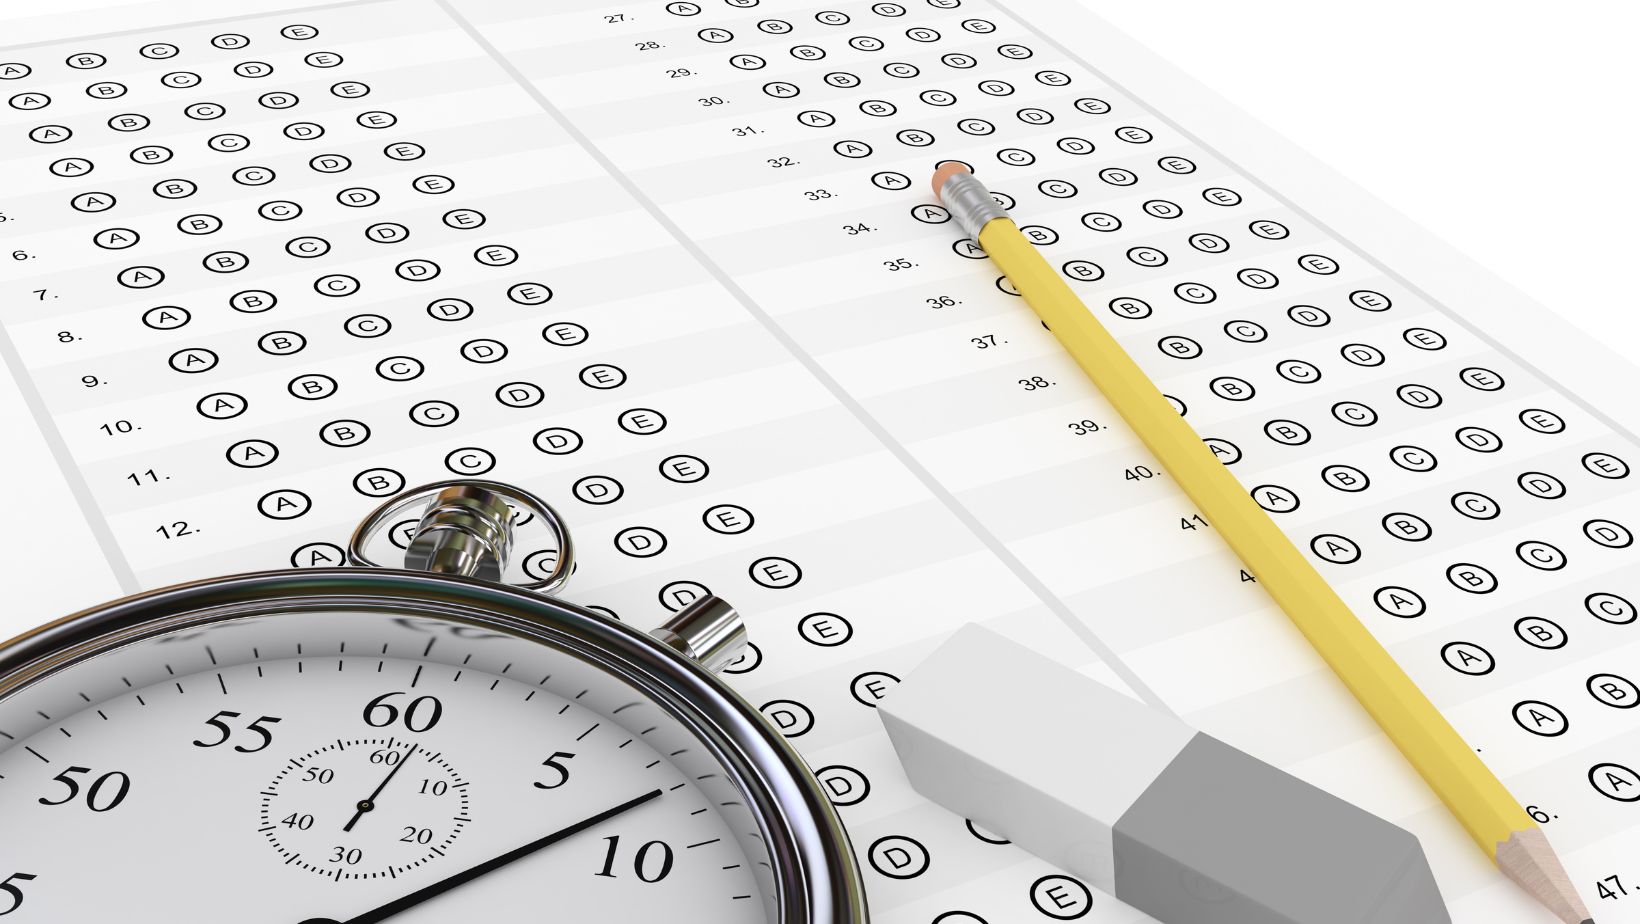 skills assessment – student training exam answers